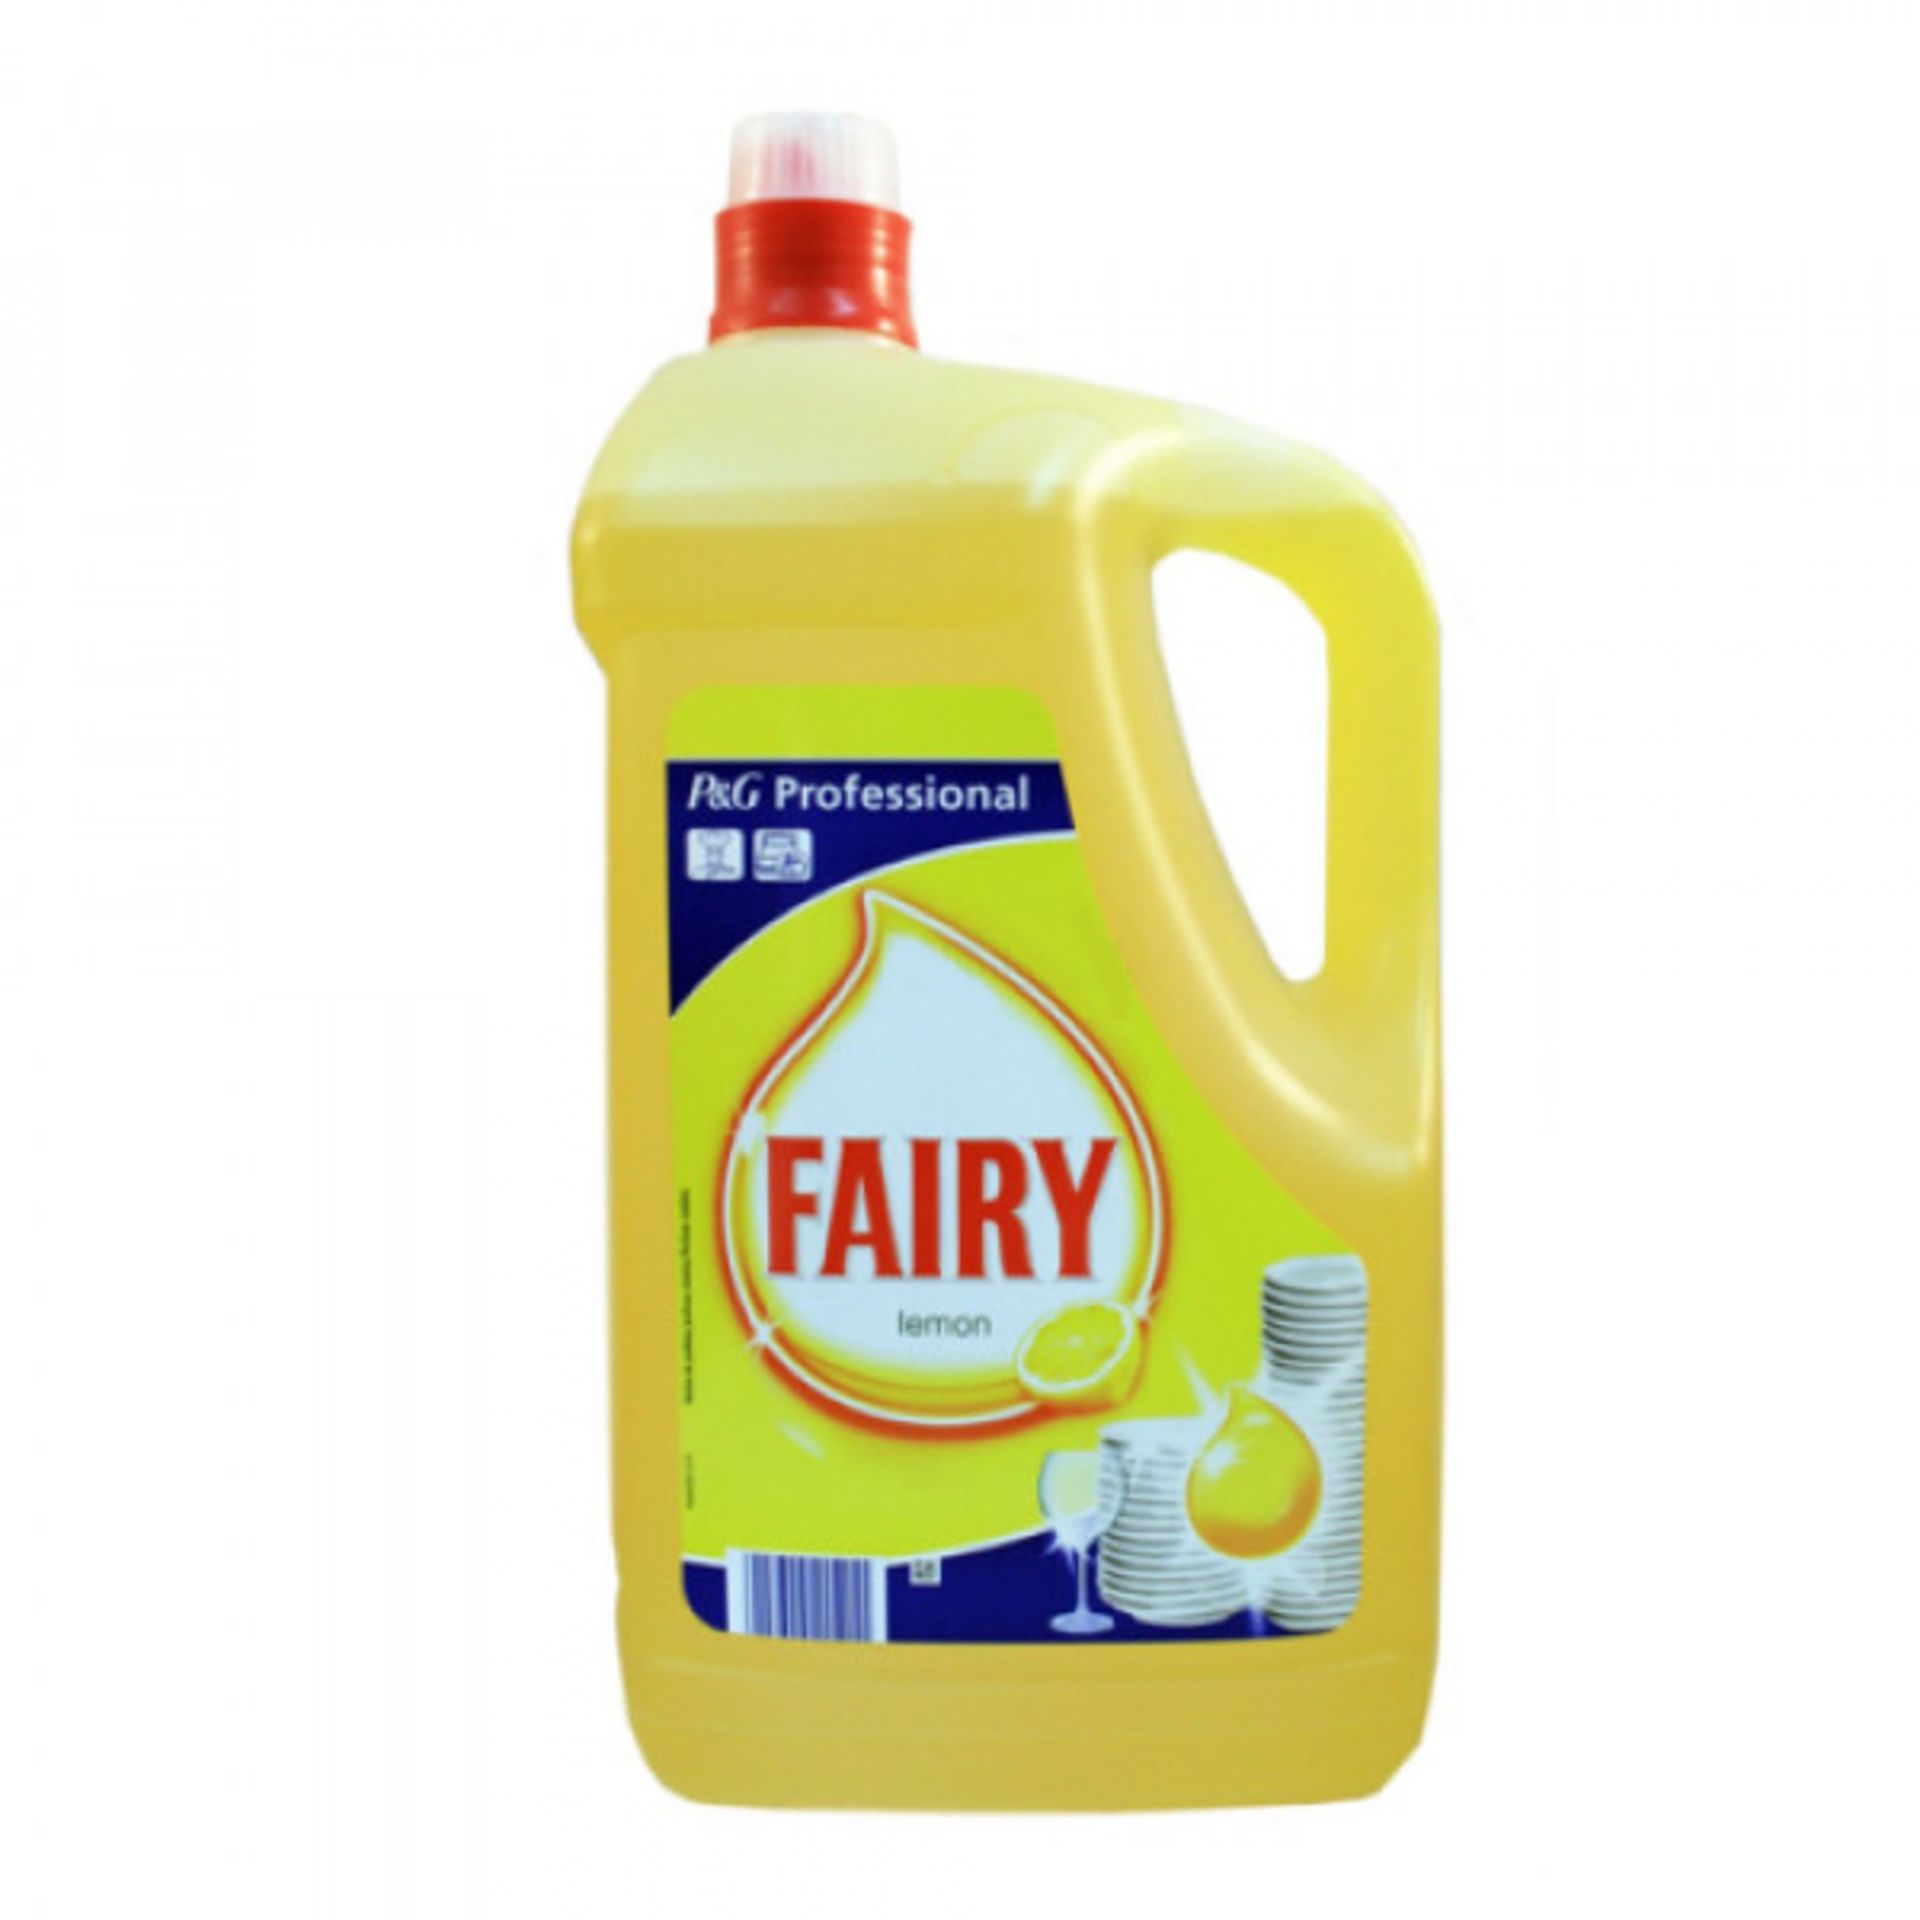 V *TRADE QTY* Brand New Fairy 5 litre Lemon Expert Washing Up Liquid ISP £20.39 (Viking Direct) X